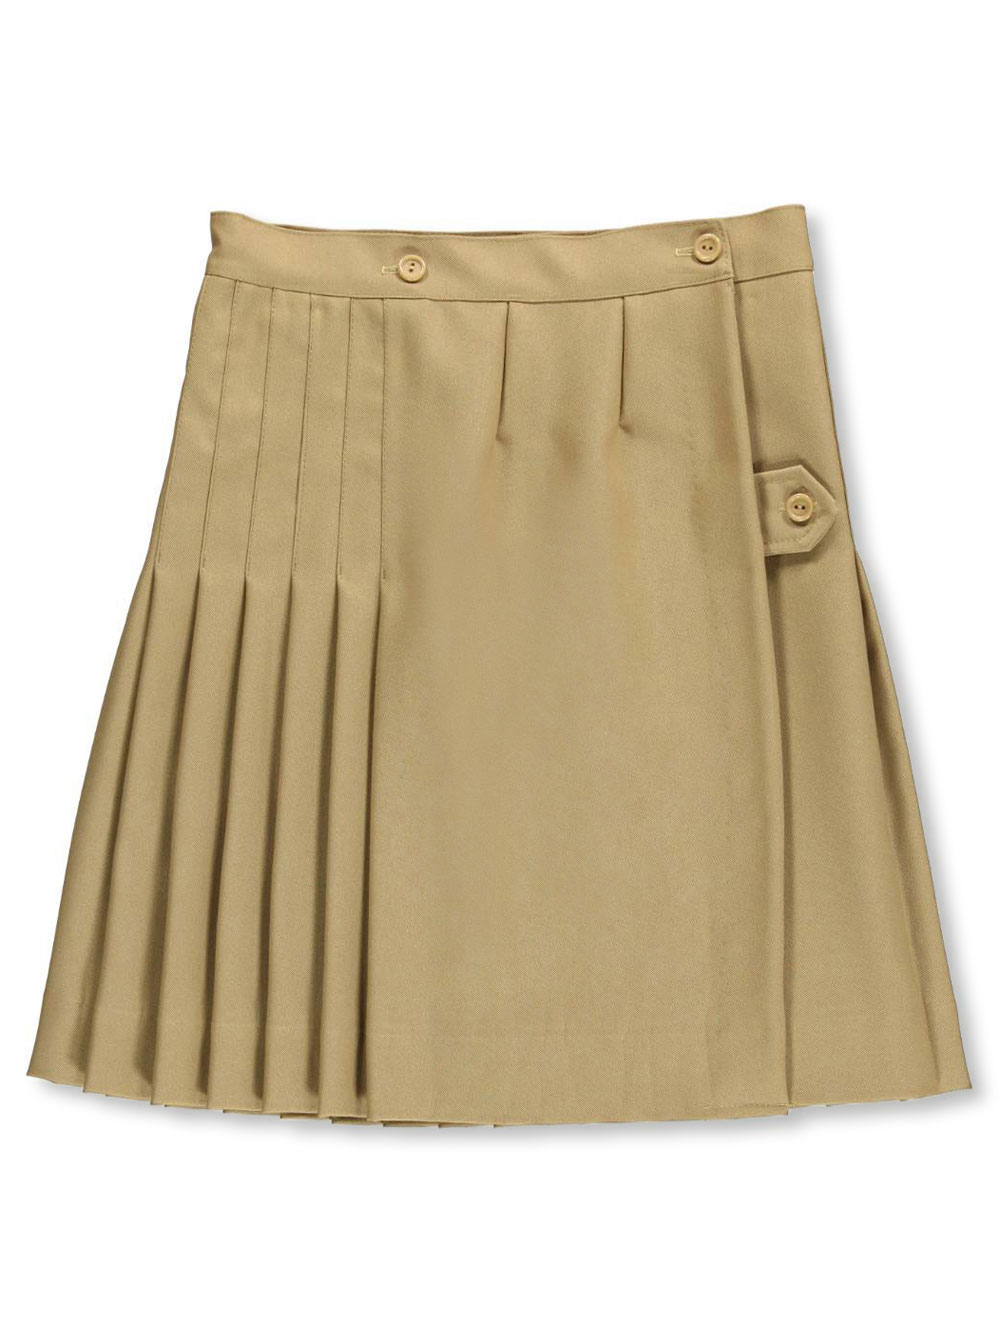 Cookie's Girls School Uniform Kilt Skirt with Tabs (Big Girls) - image 1 of 2